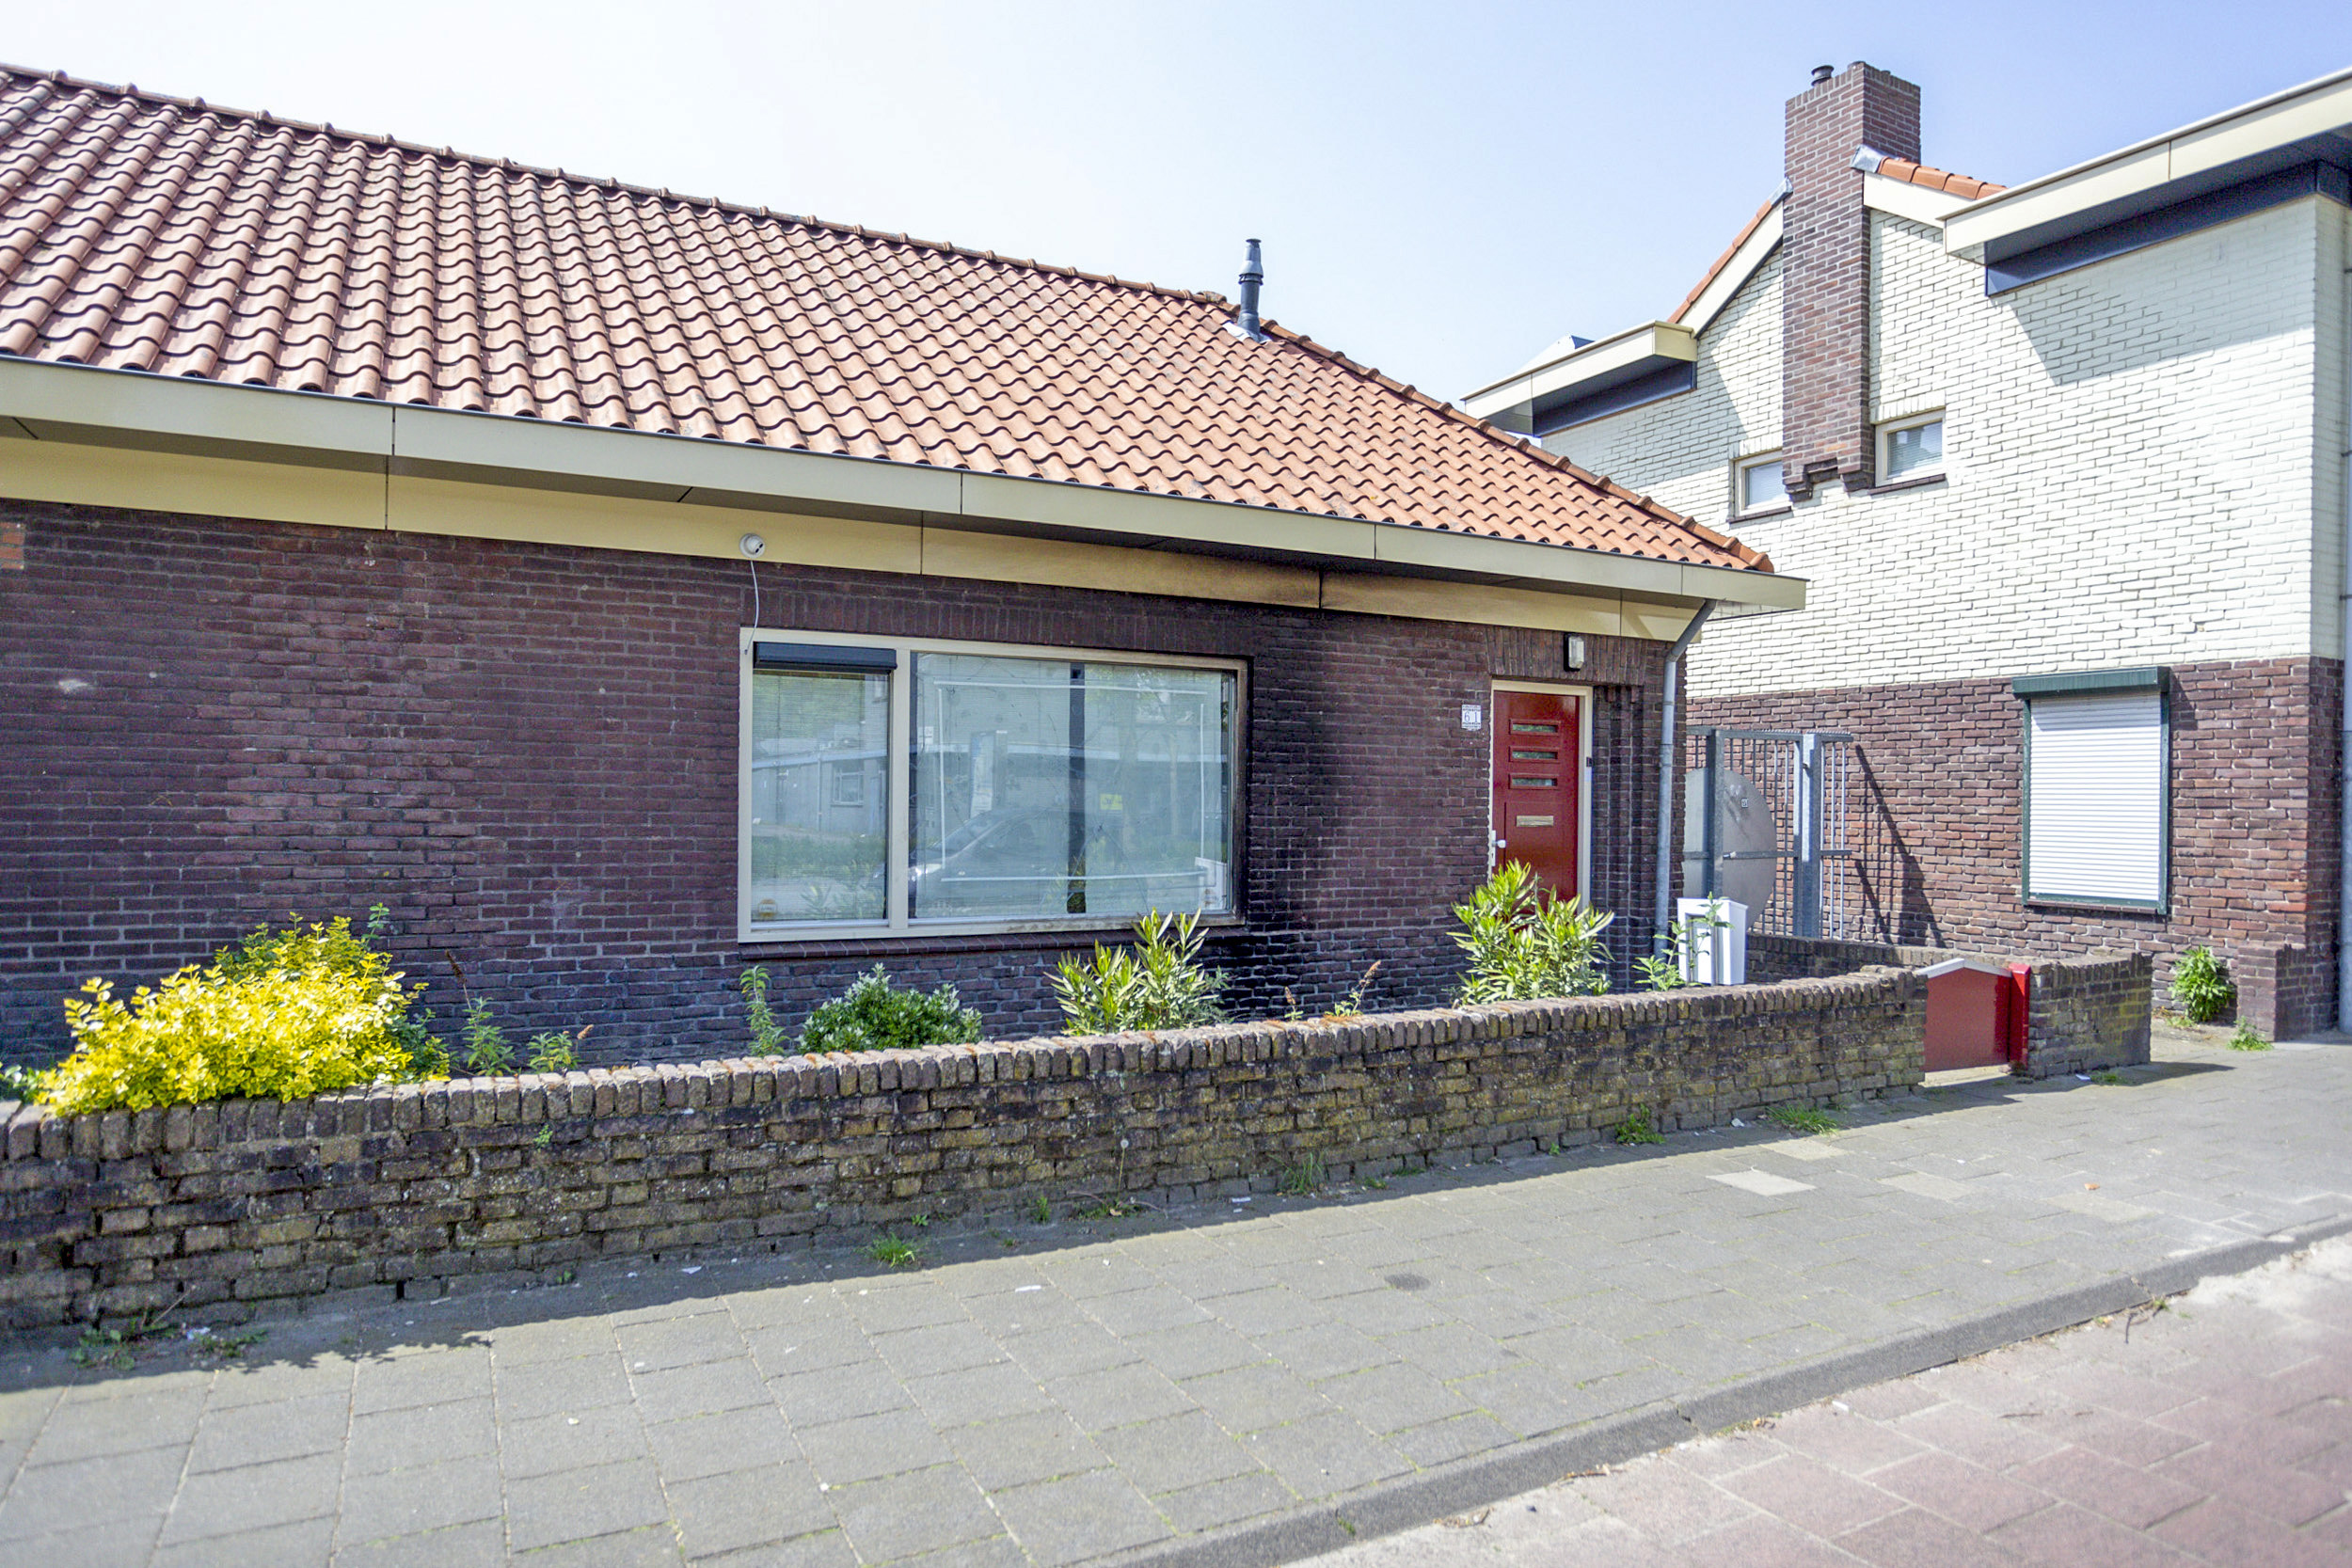 Ringbaan-Oost 61, 5014 GA Tilburg, Nederland